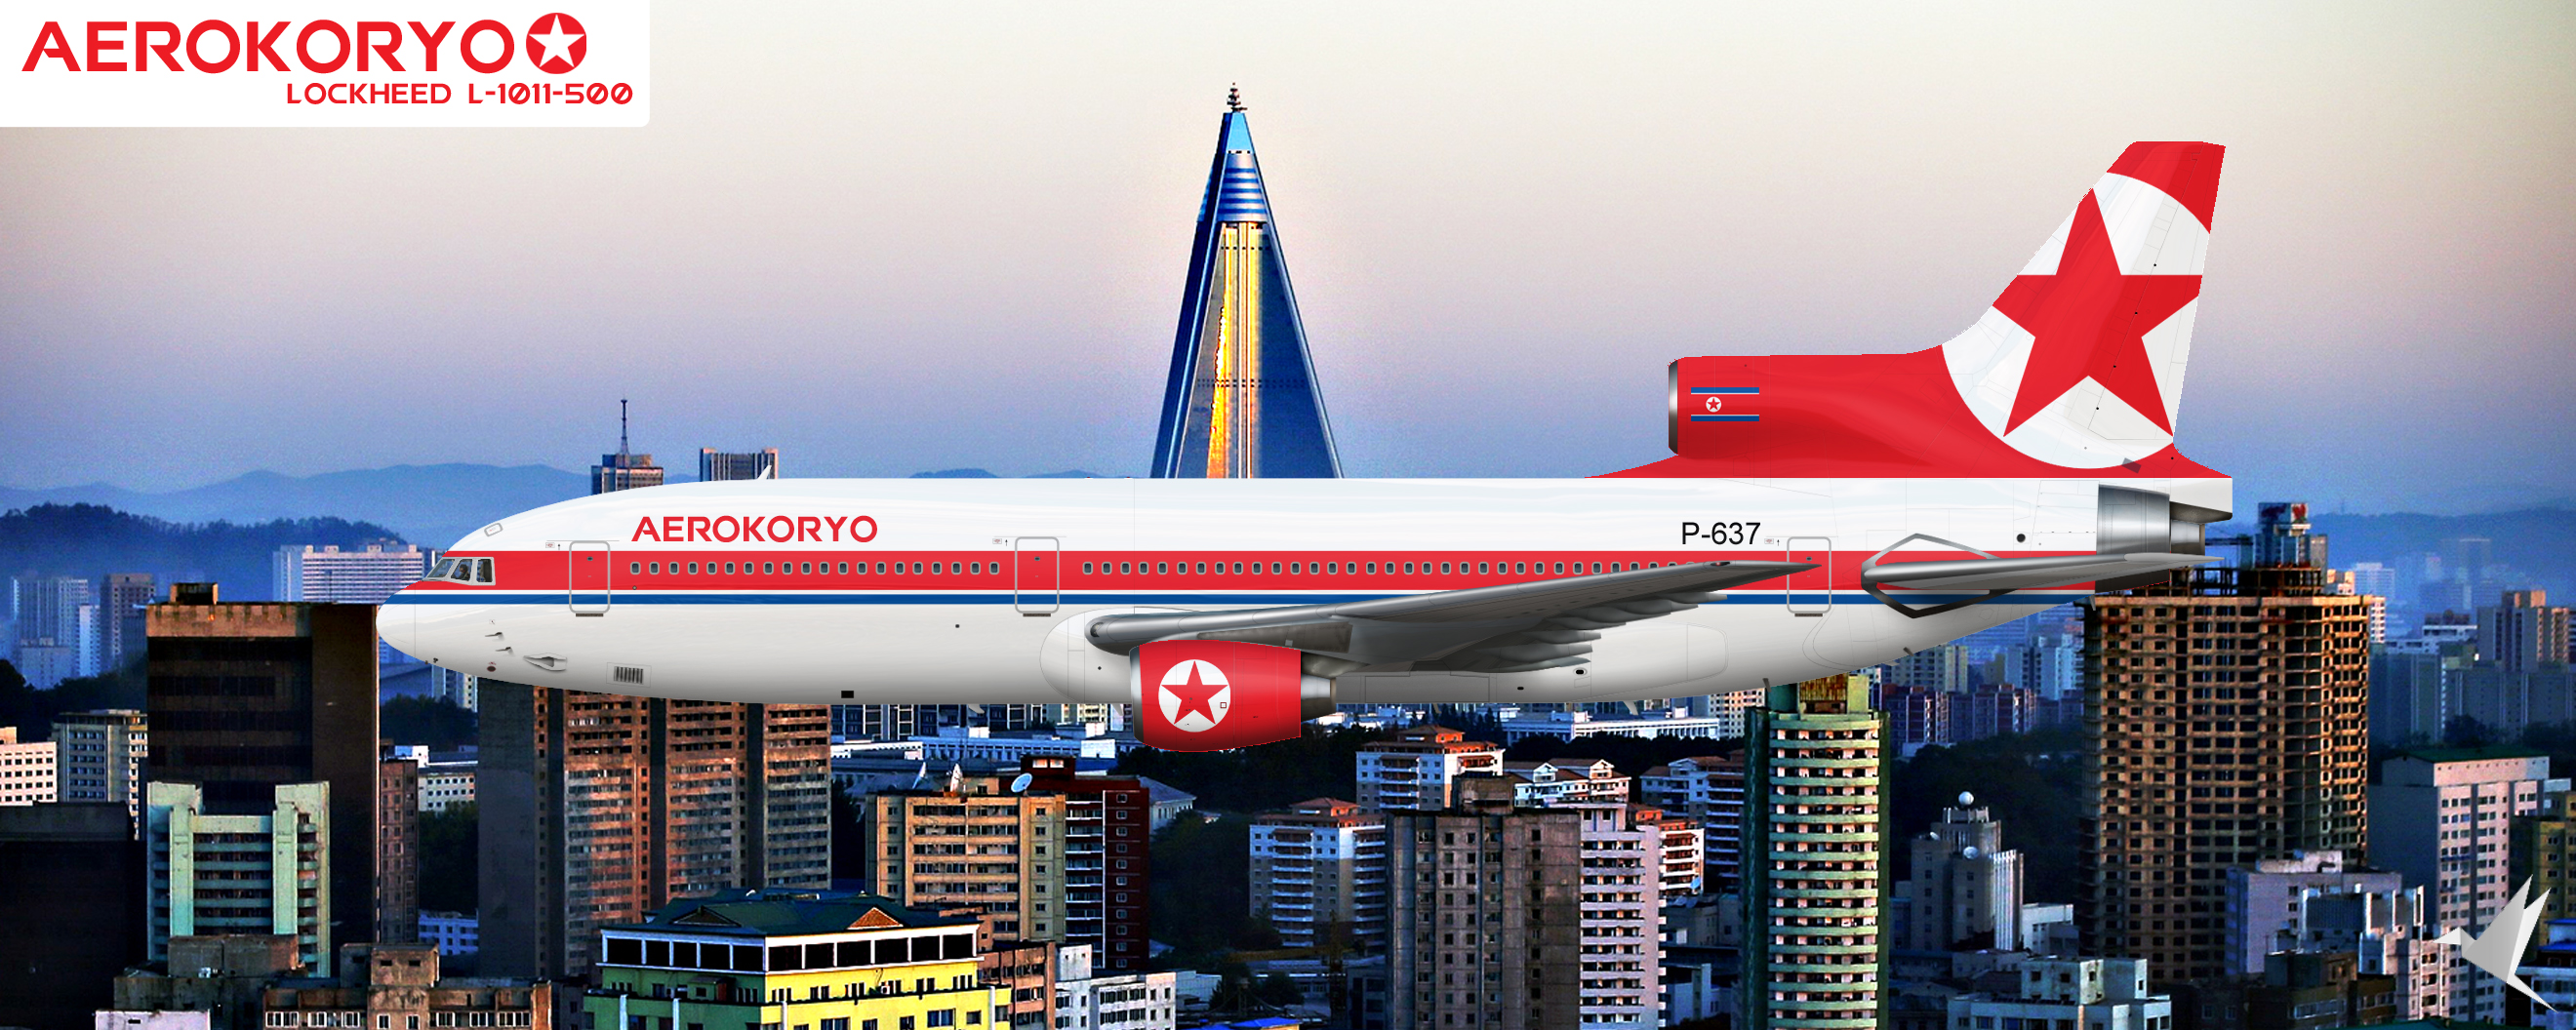 AeroKoryo - Lockheed L-1011-500